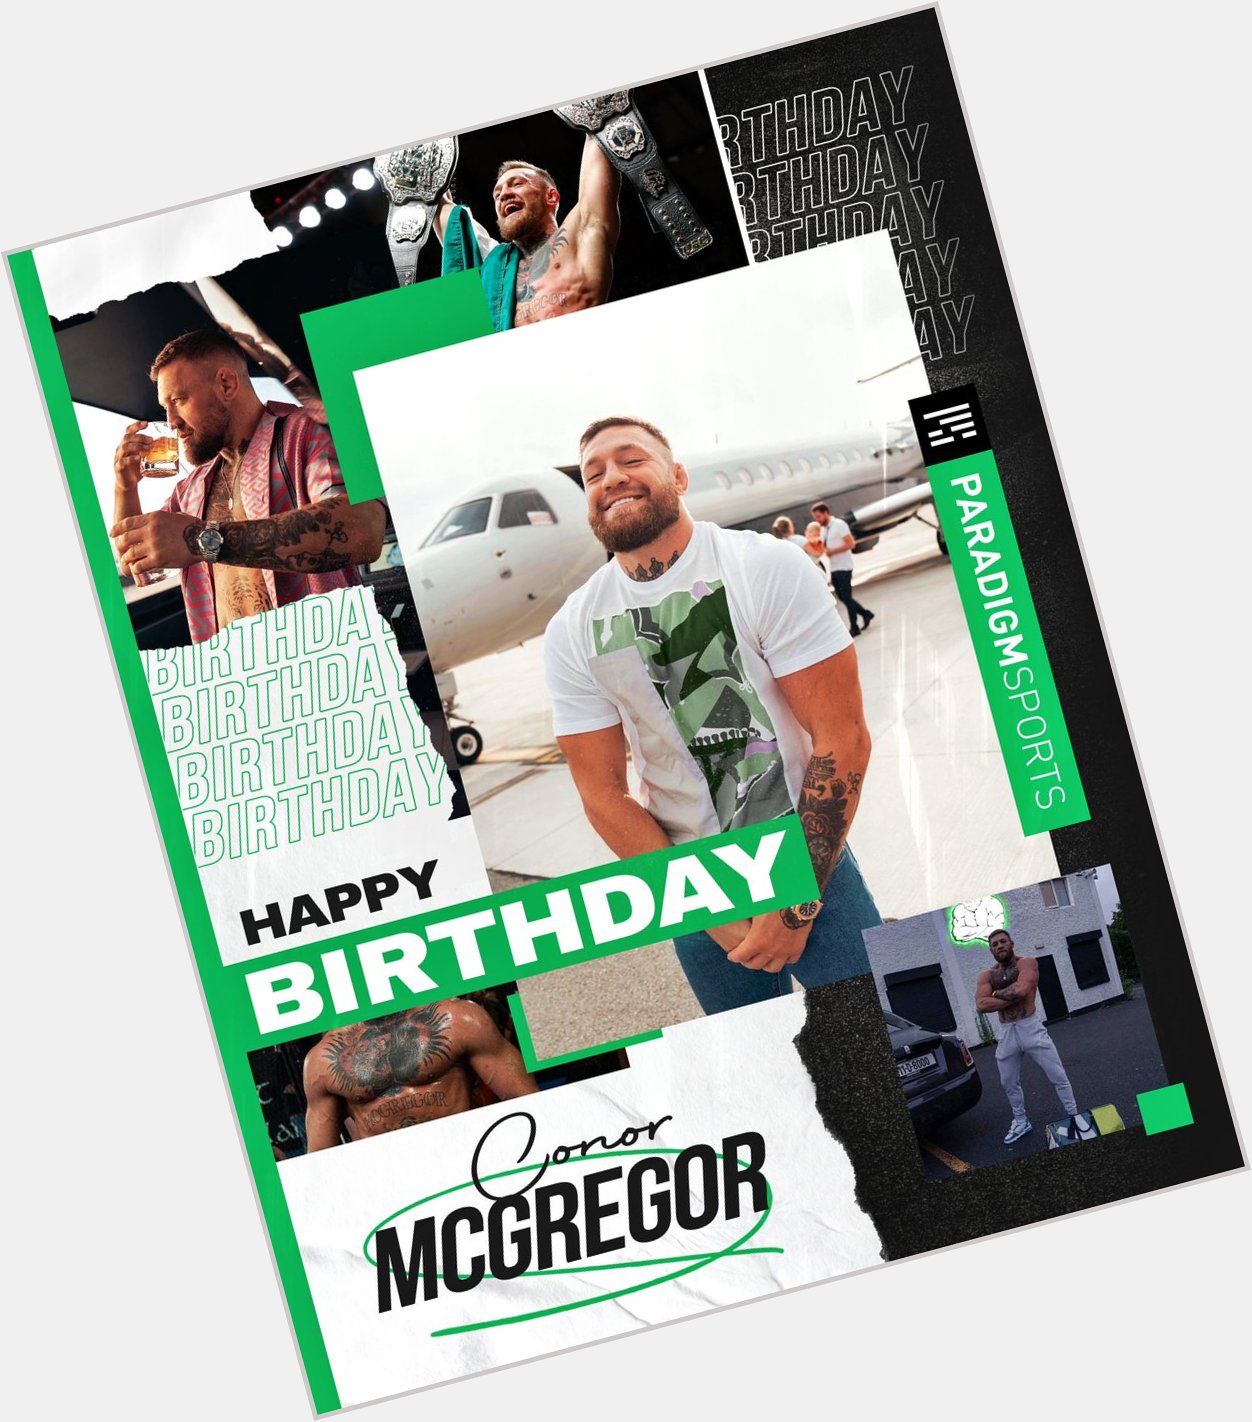 Wishing a Very Happy Birthday to Conor McGregor! 